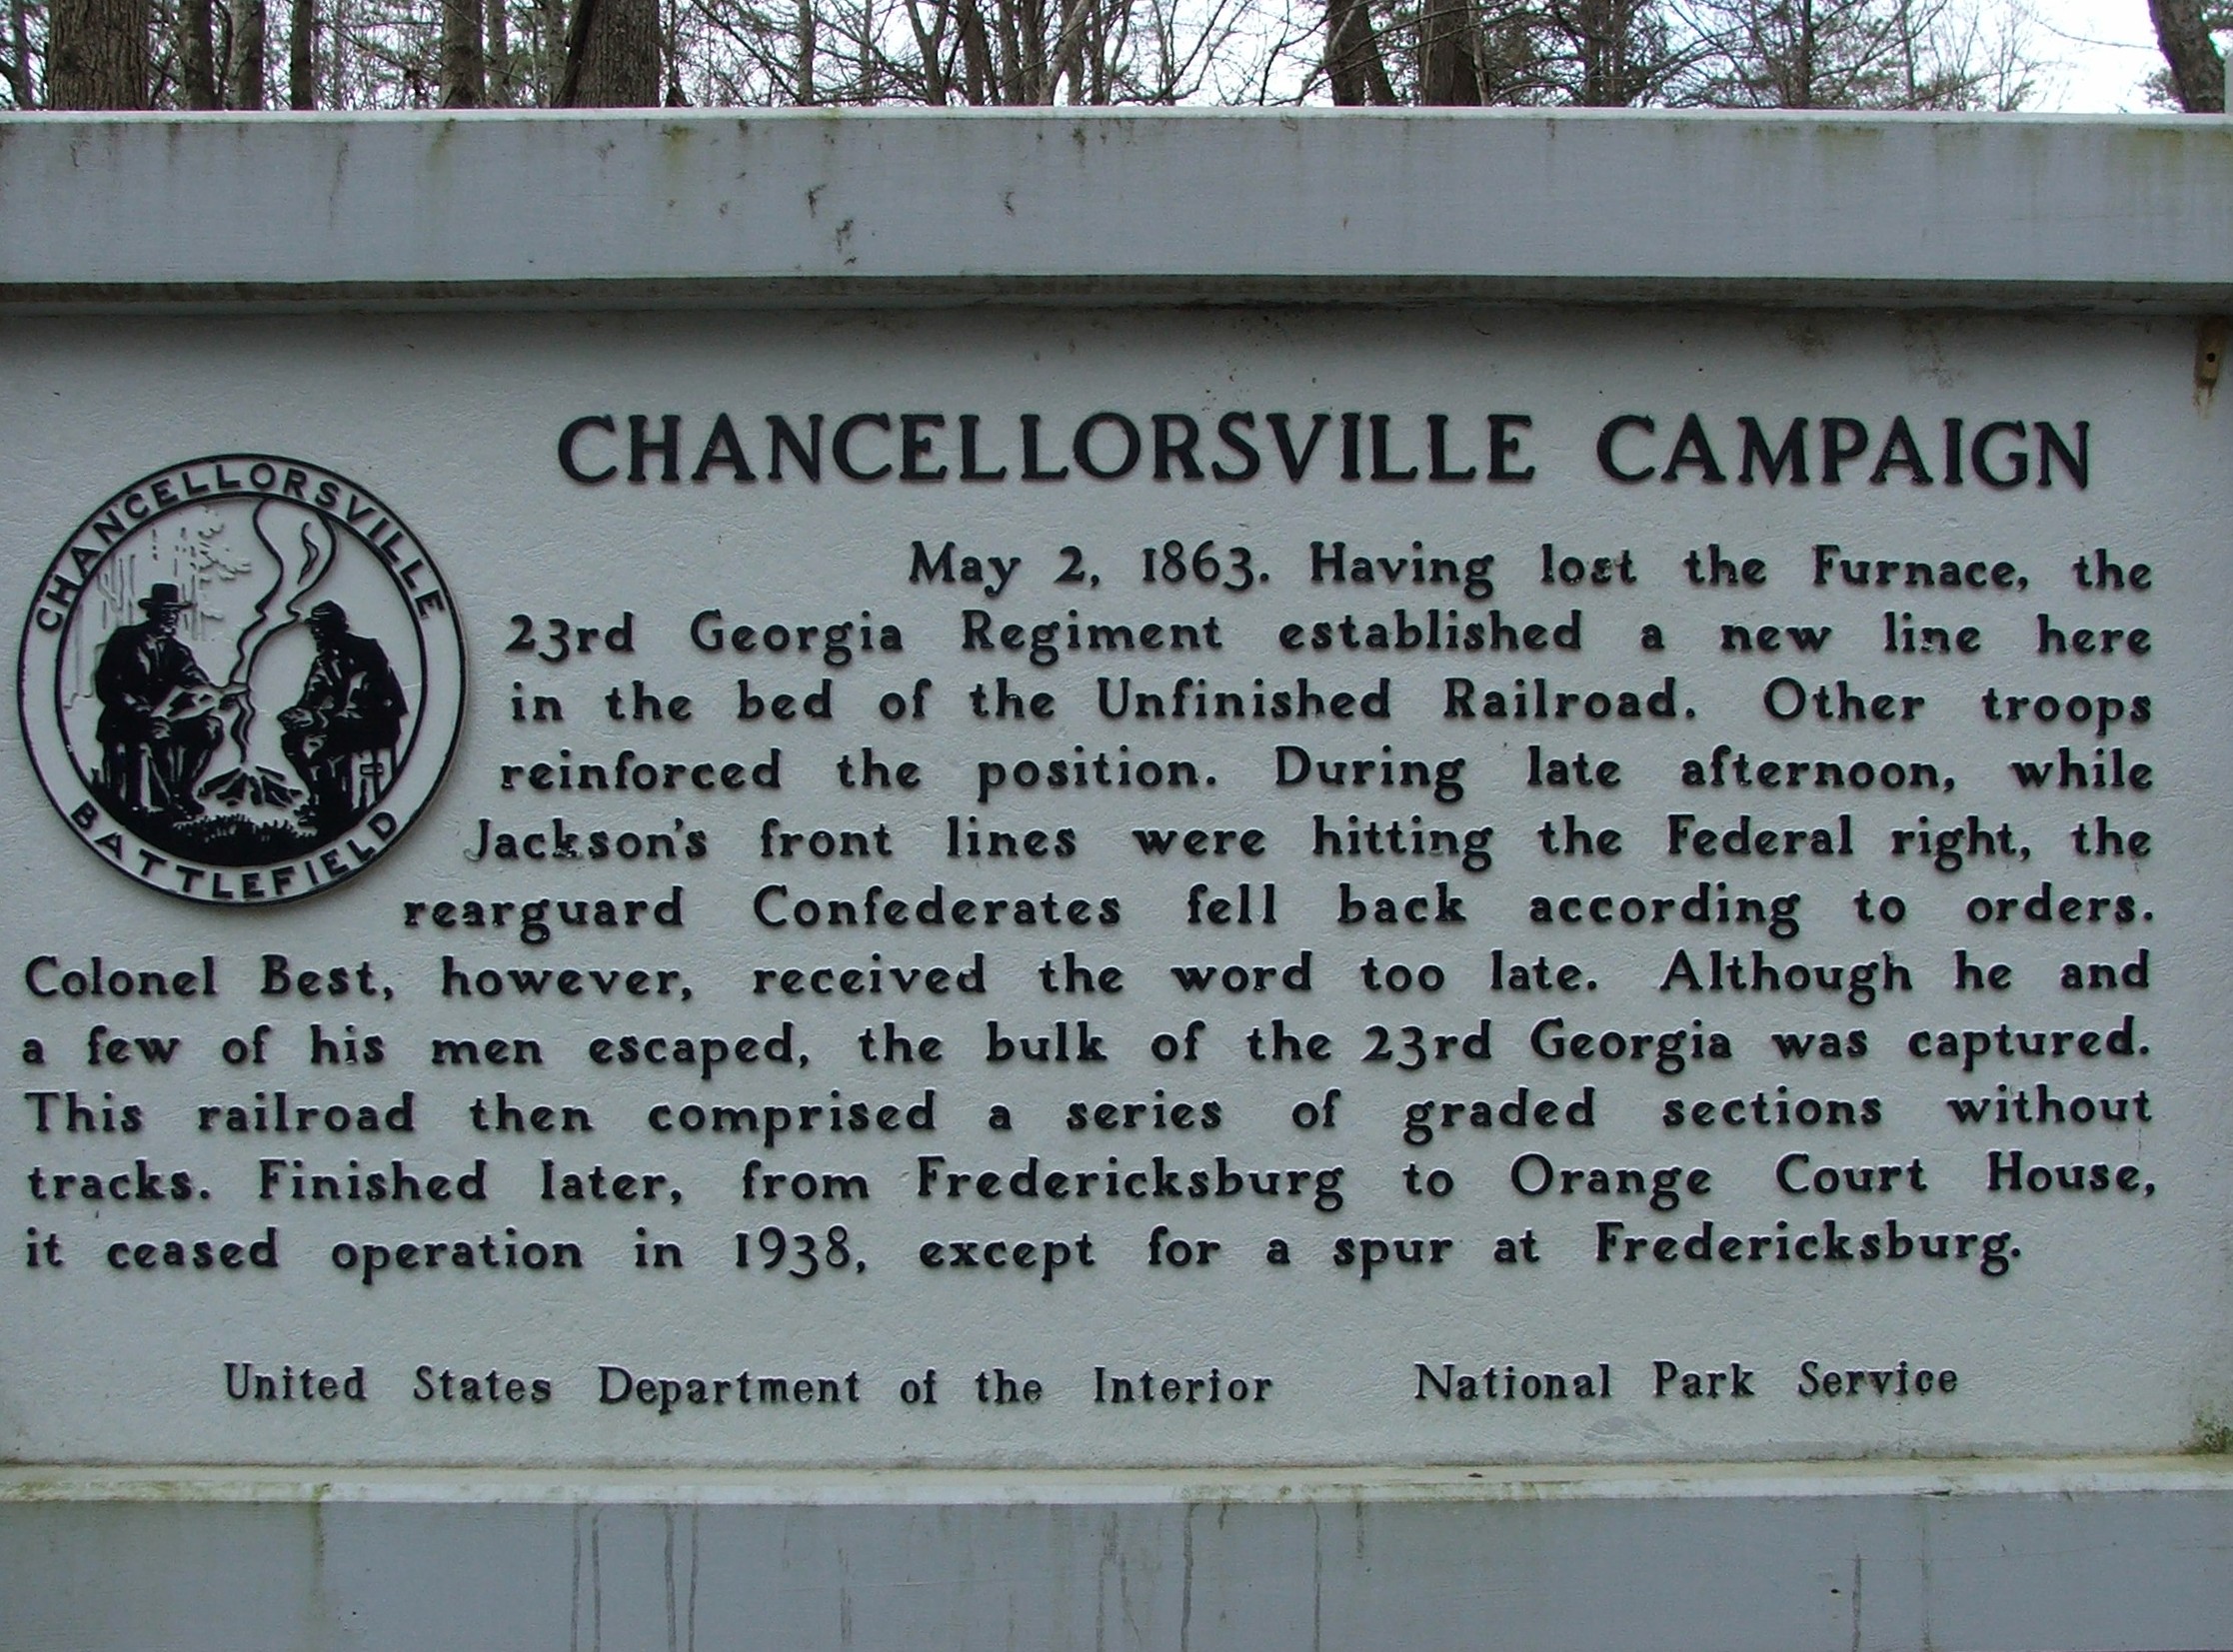 A Civil War marker in Chancellorsville battlefield signifying the importance RR grade